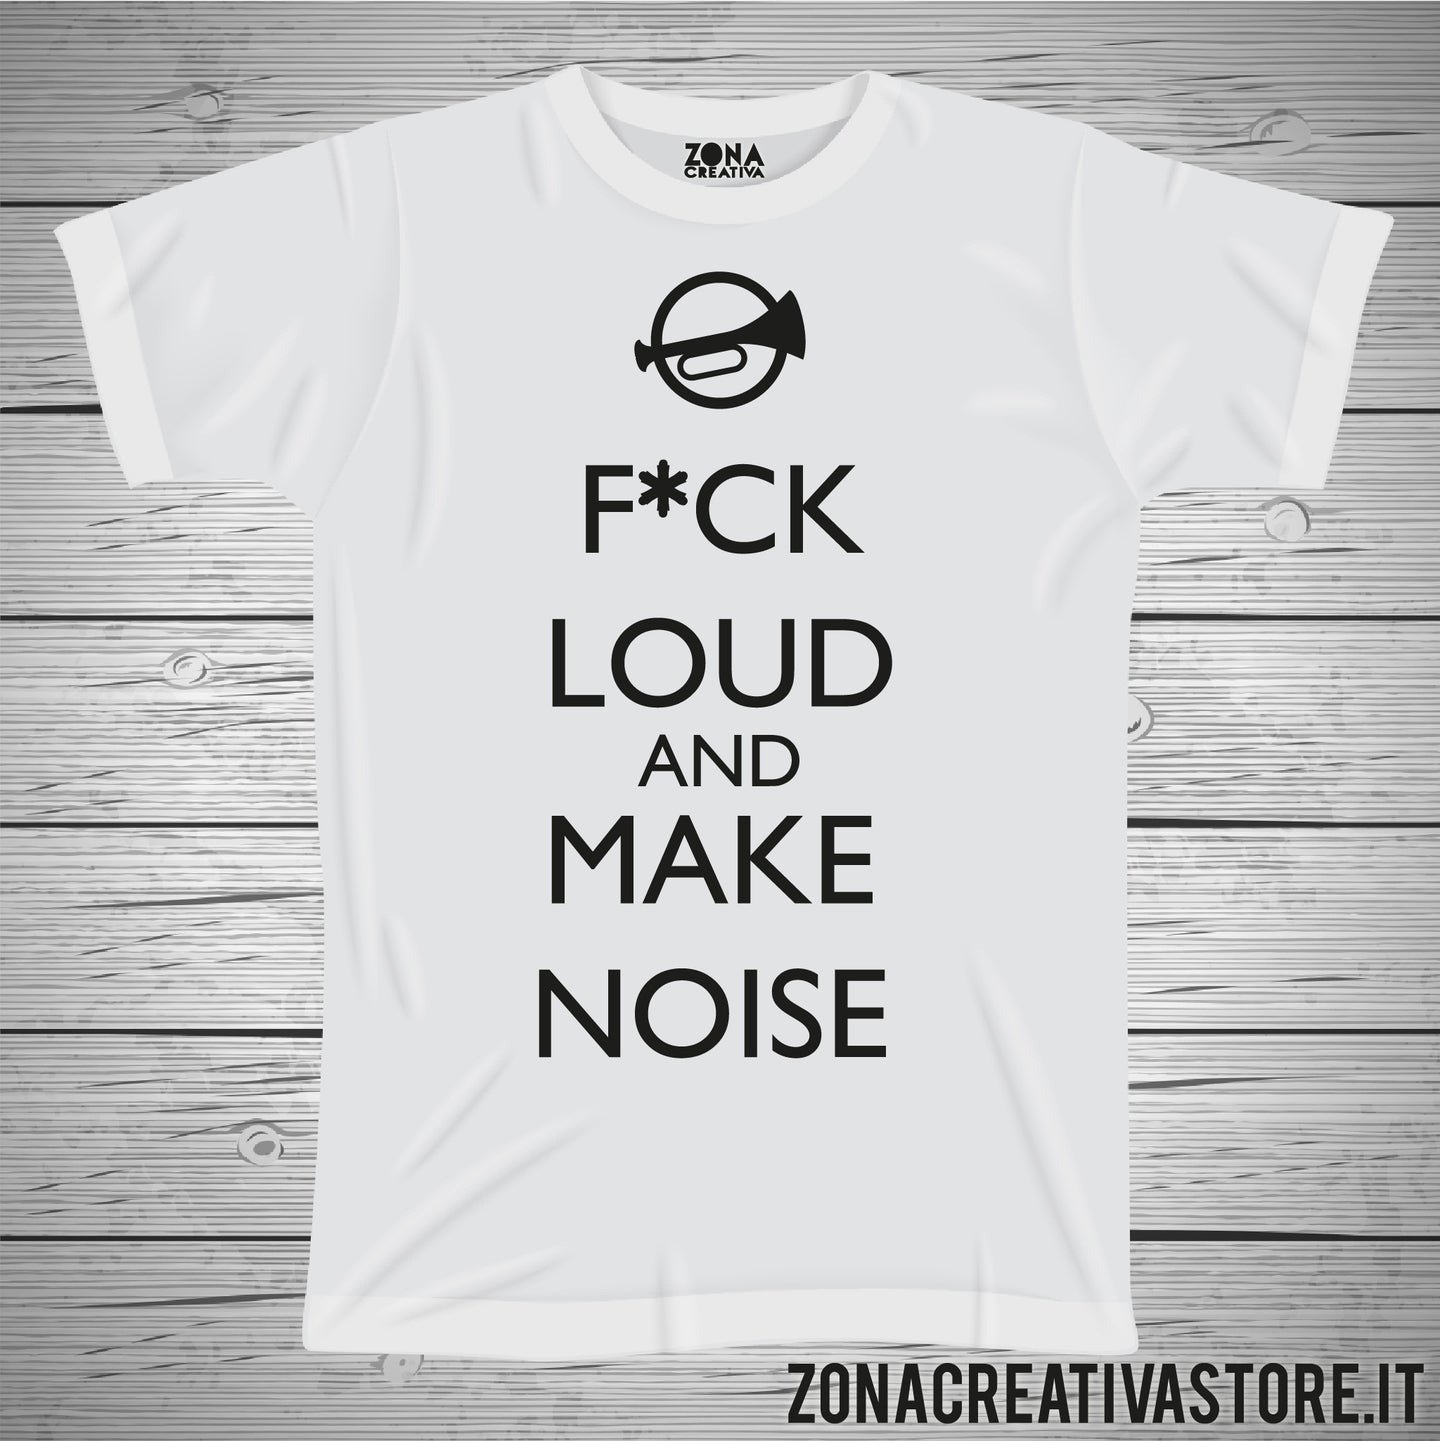 T-shirt KEEP CALM FUCK LOUD AND MAKE NOISE